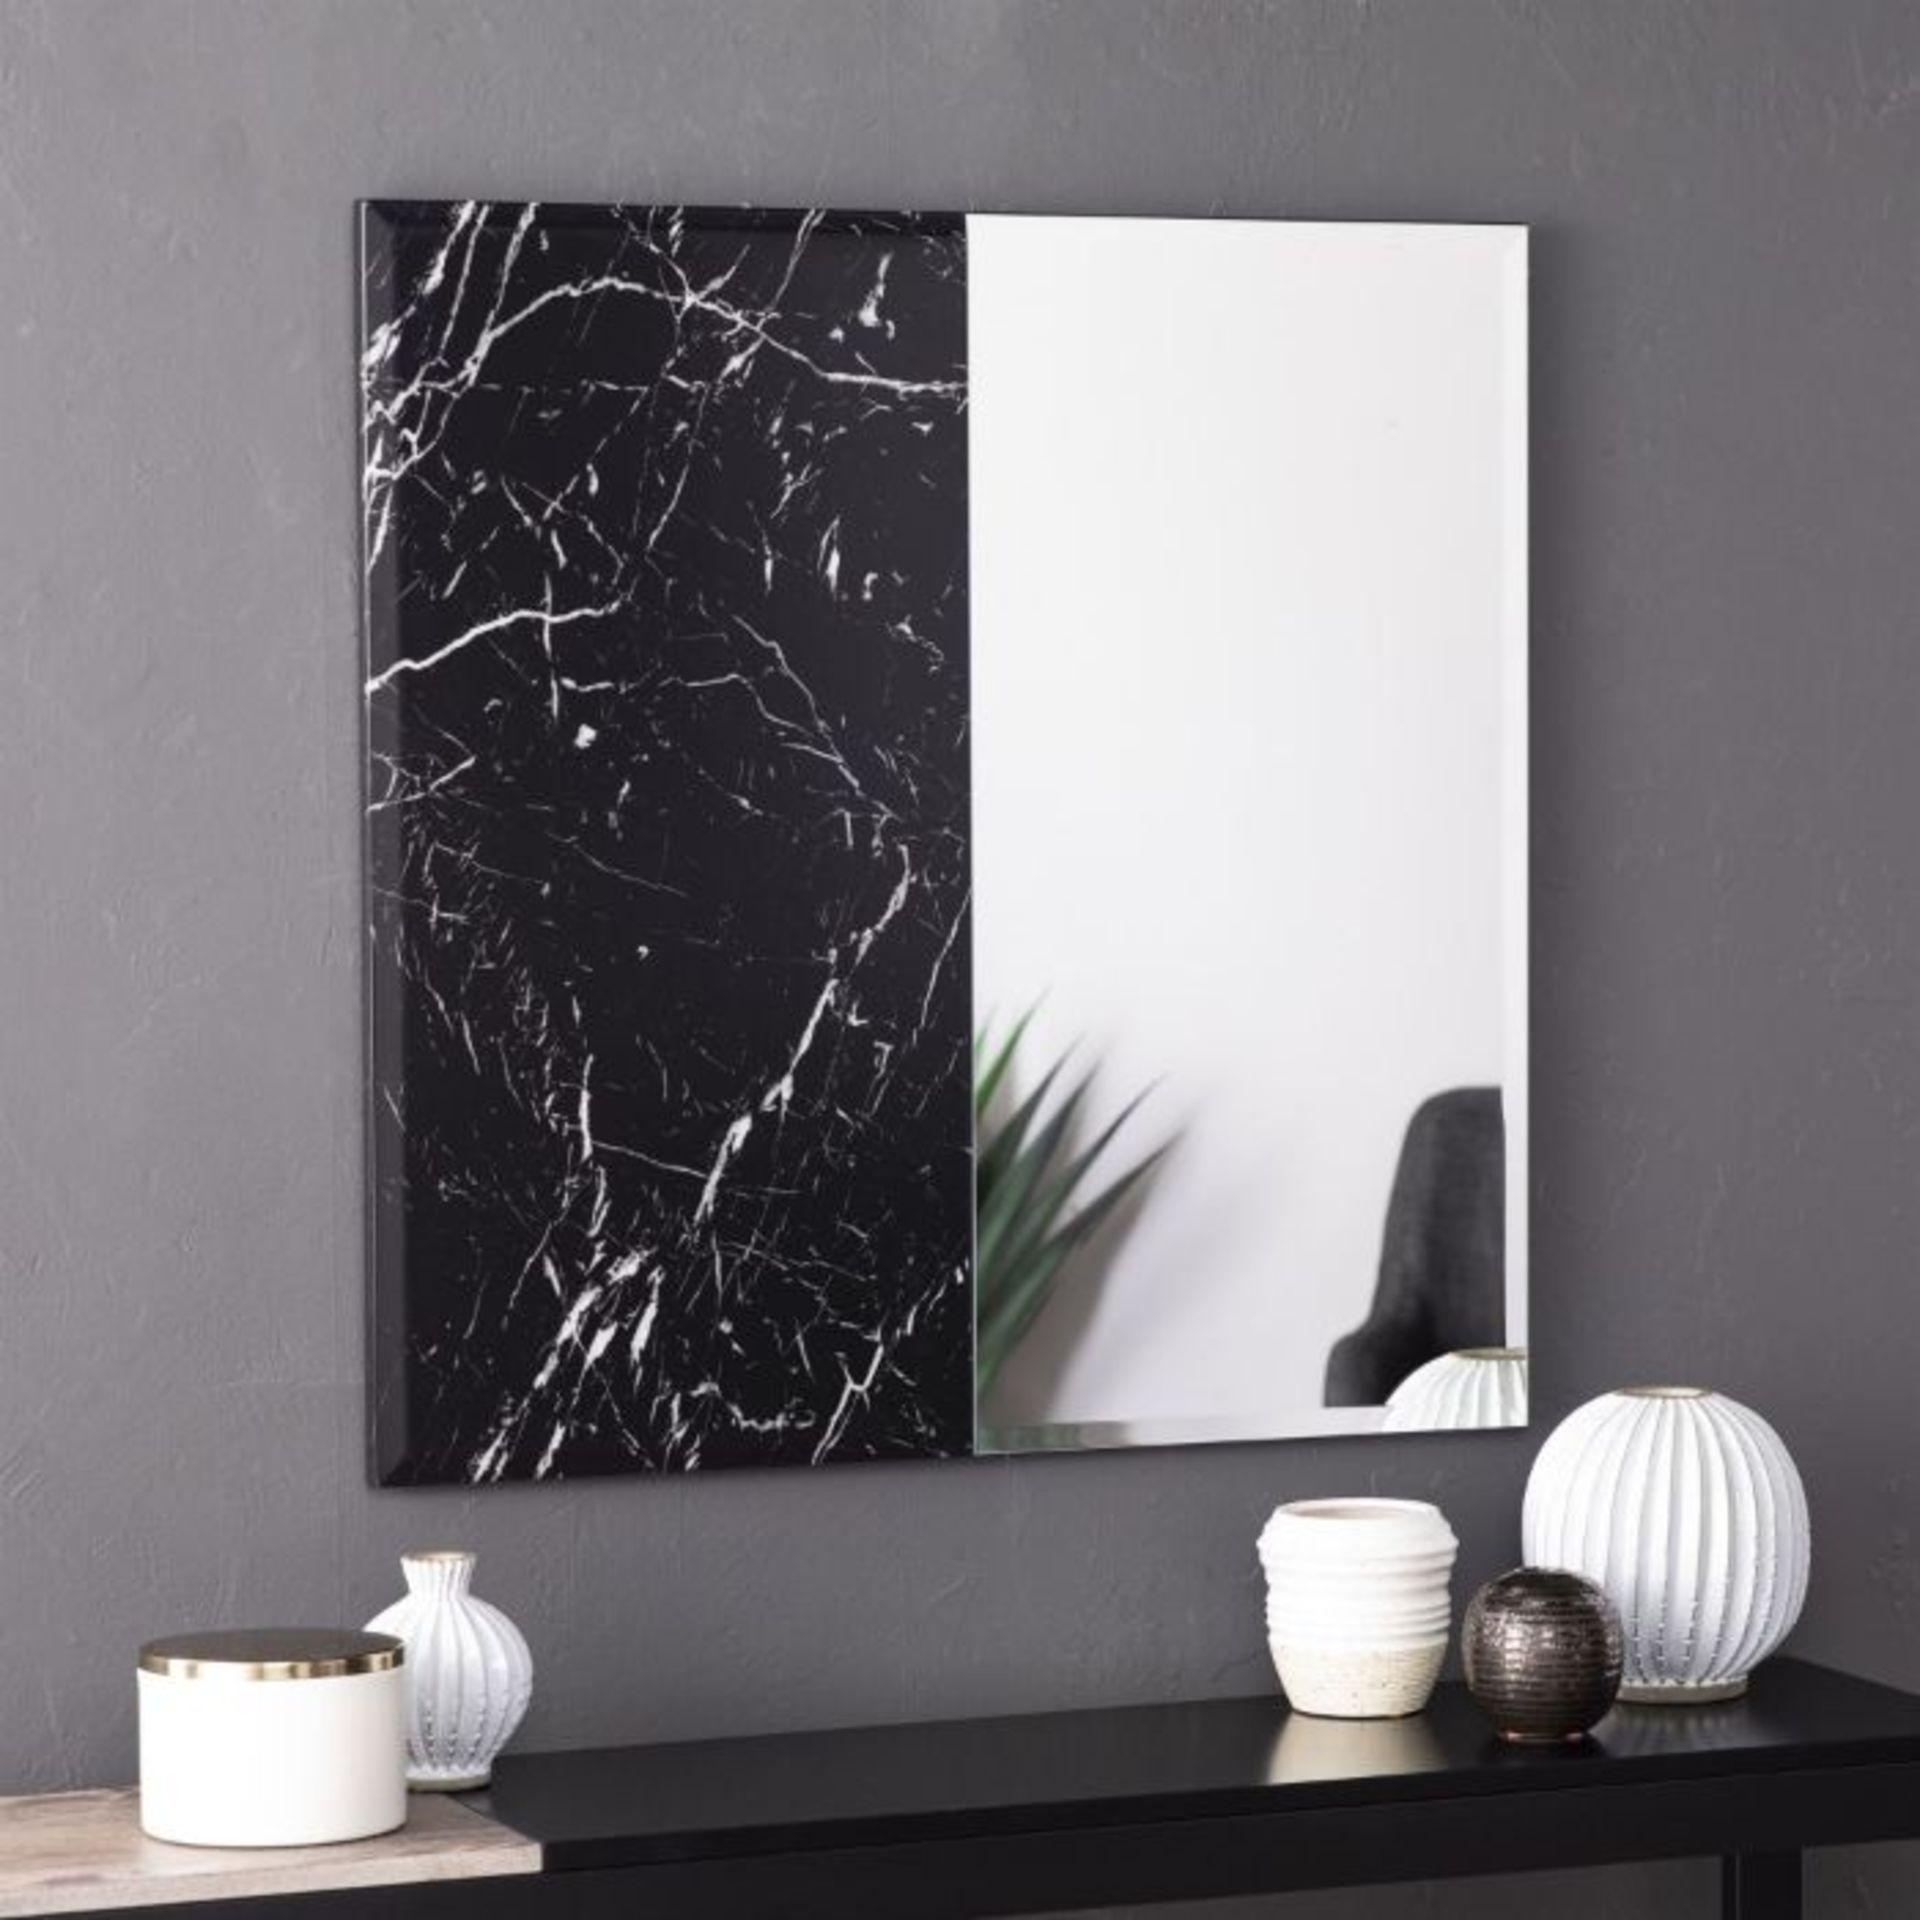 SEI Furniture Decorative Mirror RRP £137.99 - Image 2 of 5